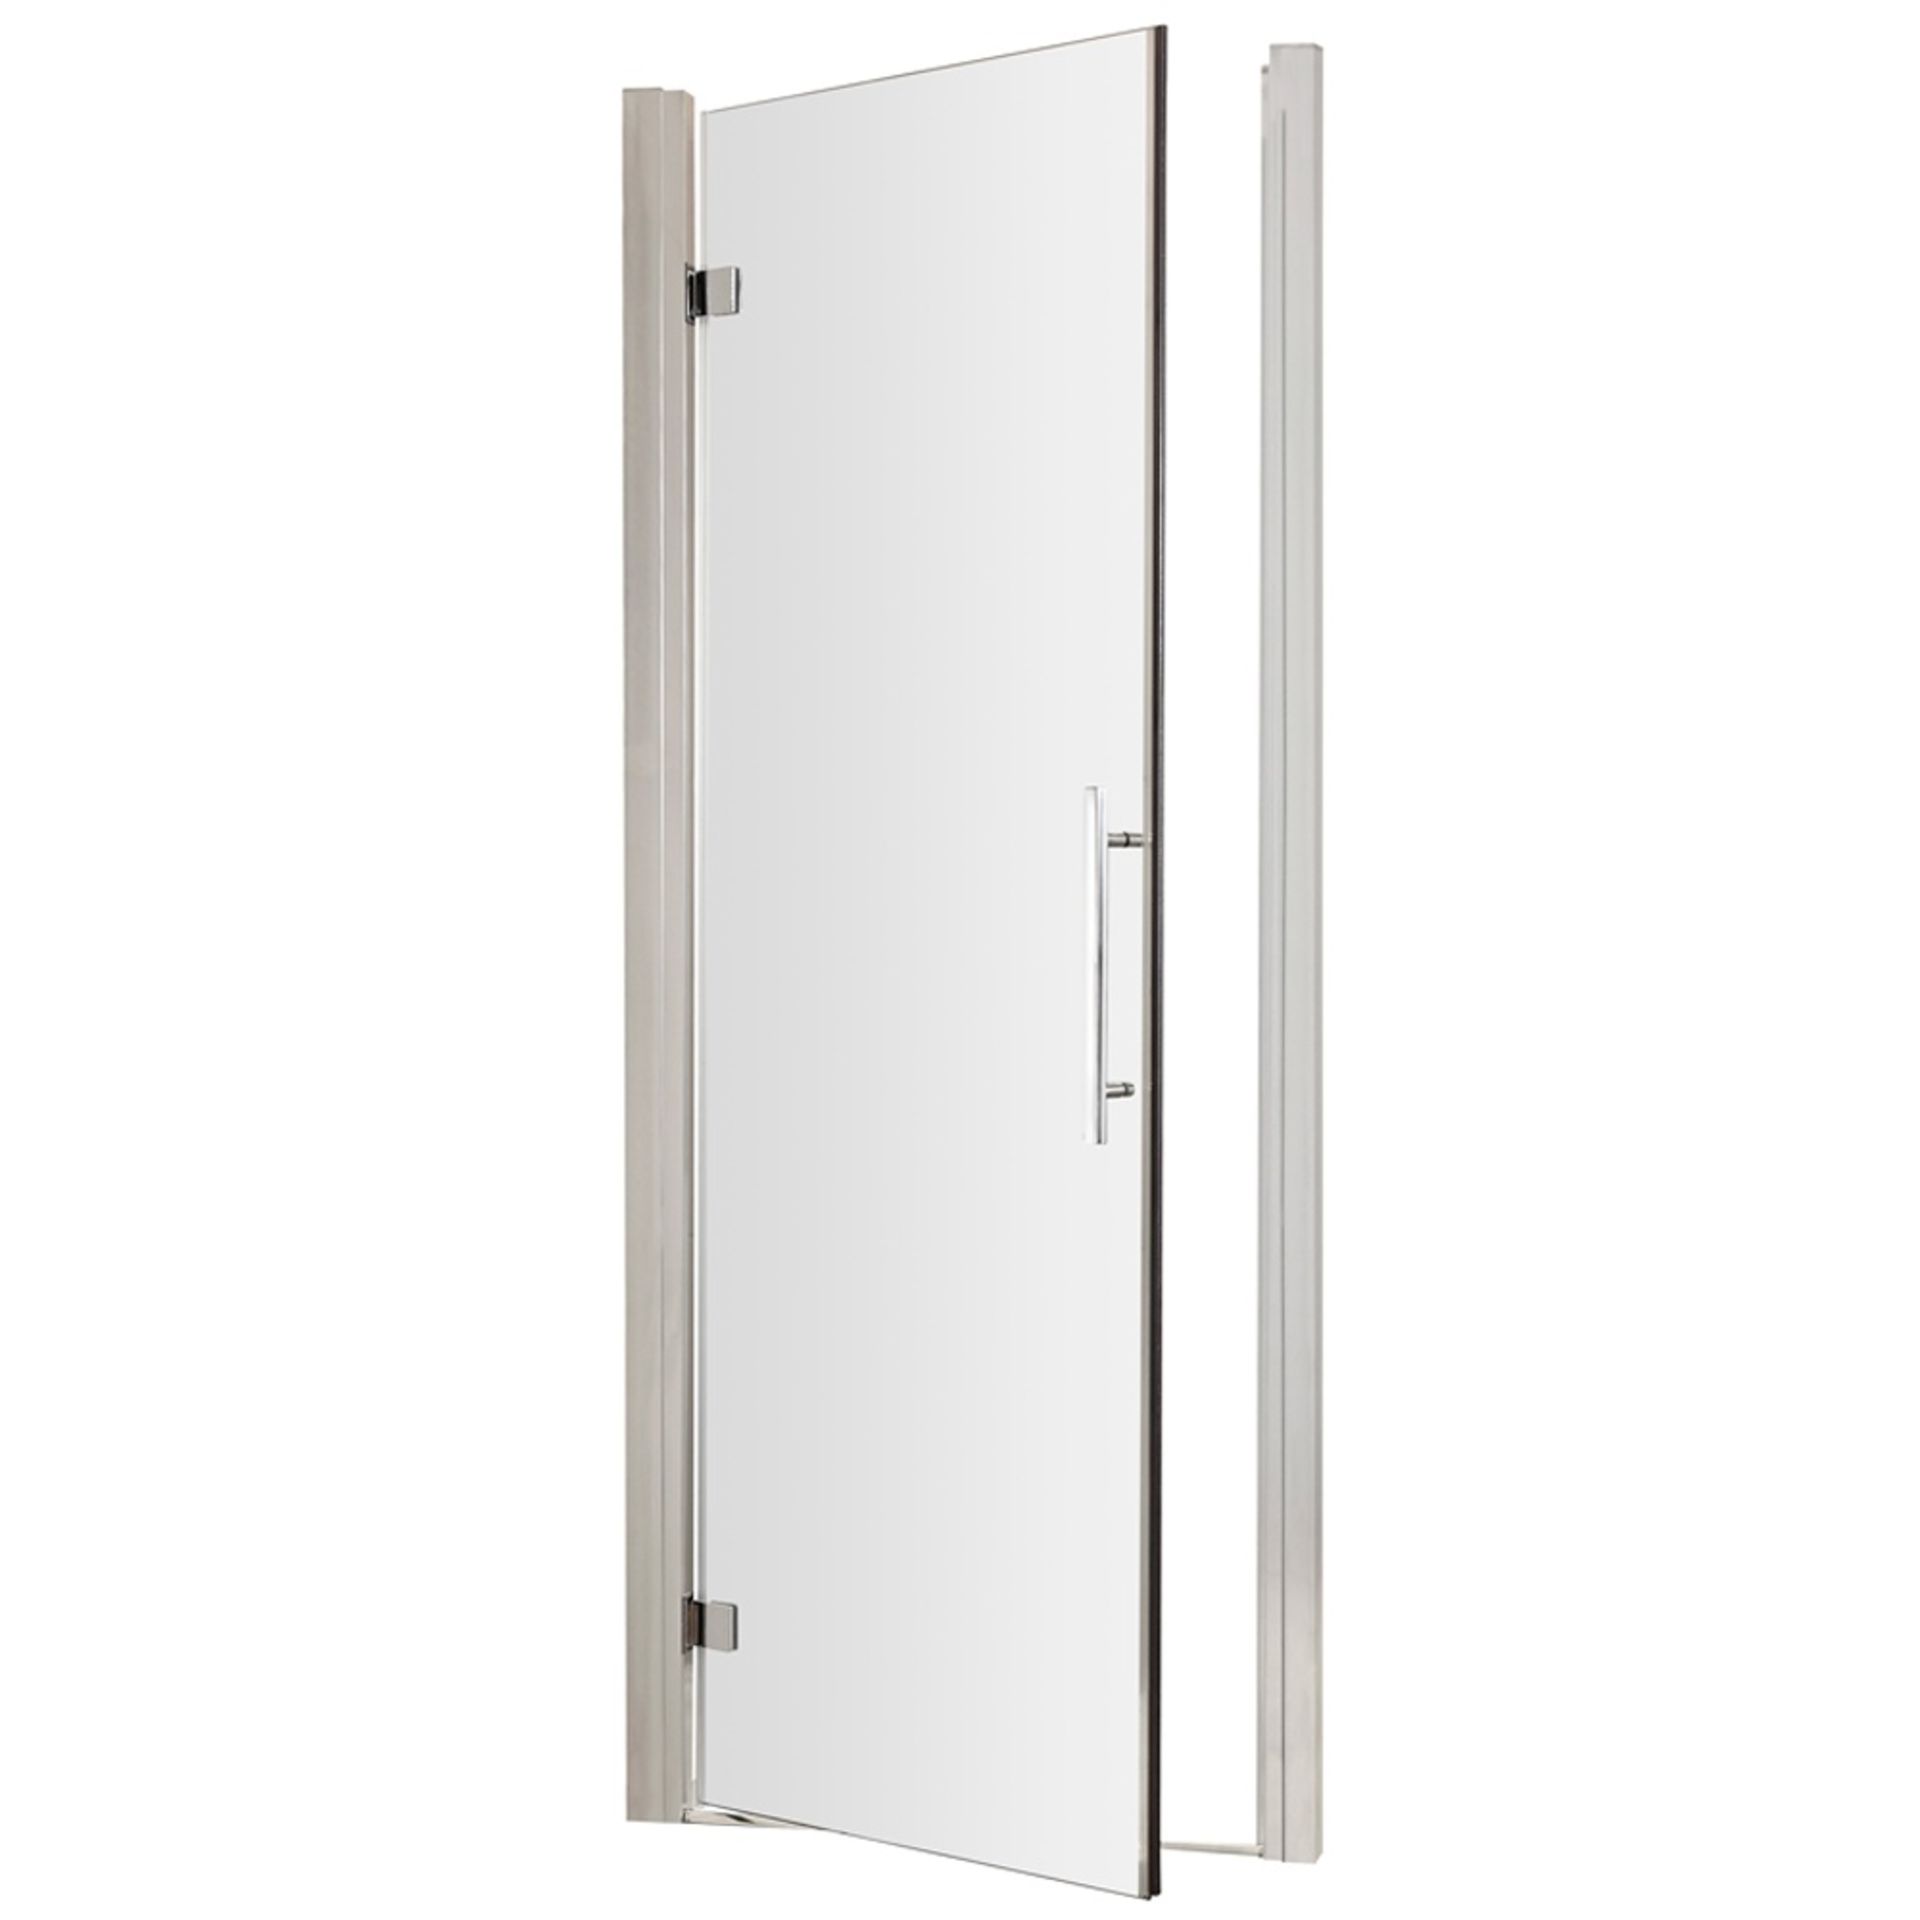 NEW (F7) 800x760mm - 8mm - Premium EasyClean Hinged Door Shower Enclosure. Includes 800x760mm S... - Image 2 of 2